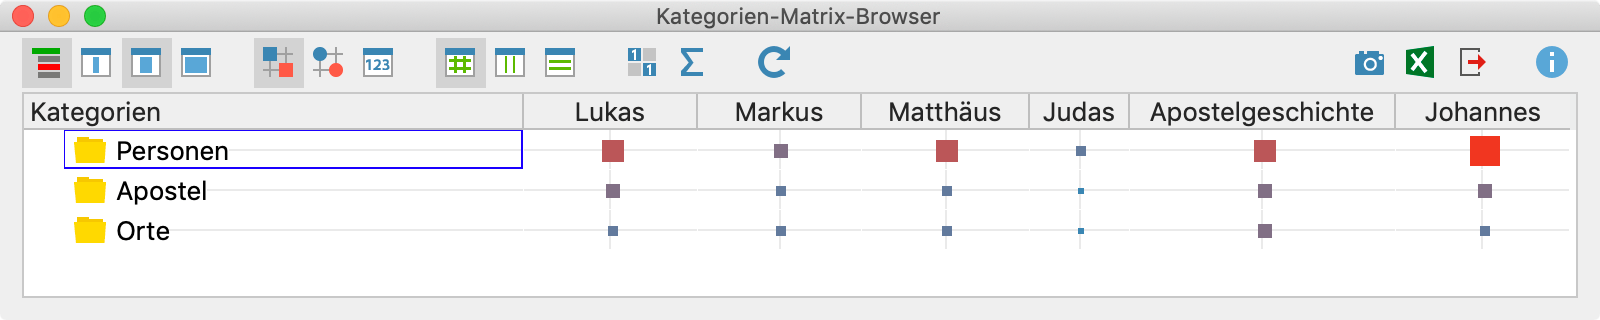 Der Kategorien-Matrix-Browser 